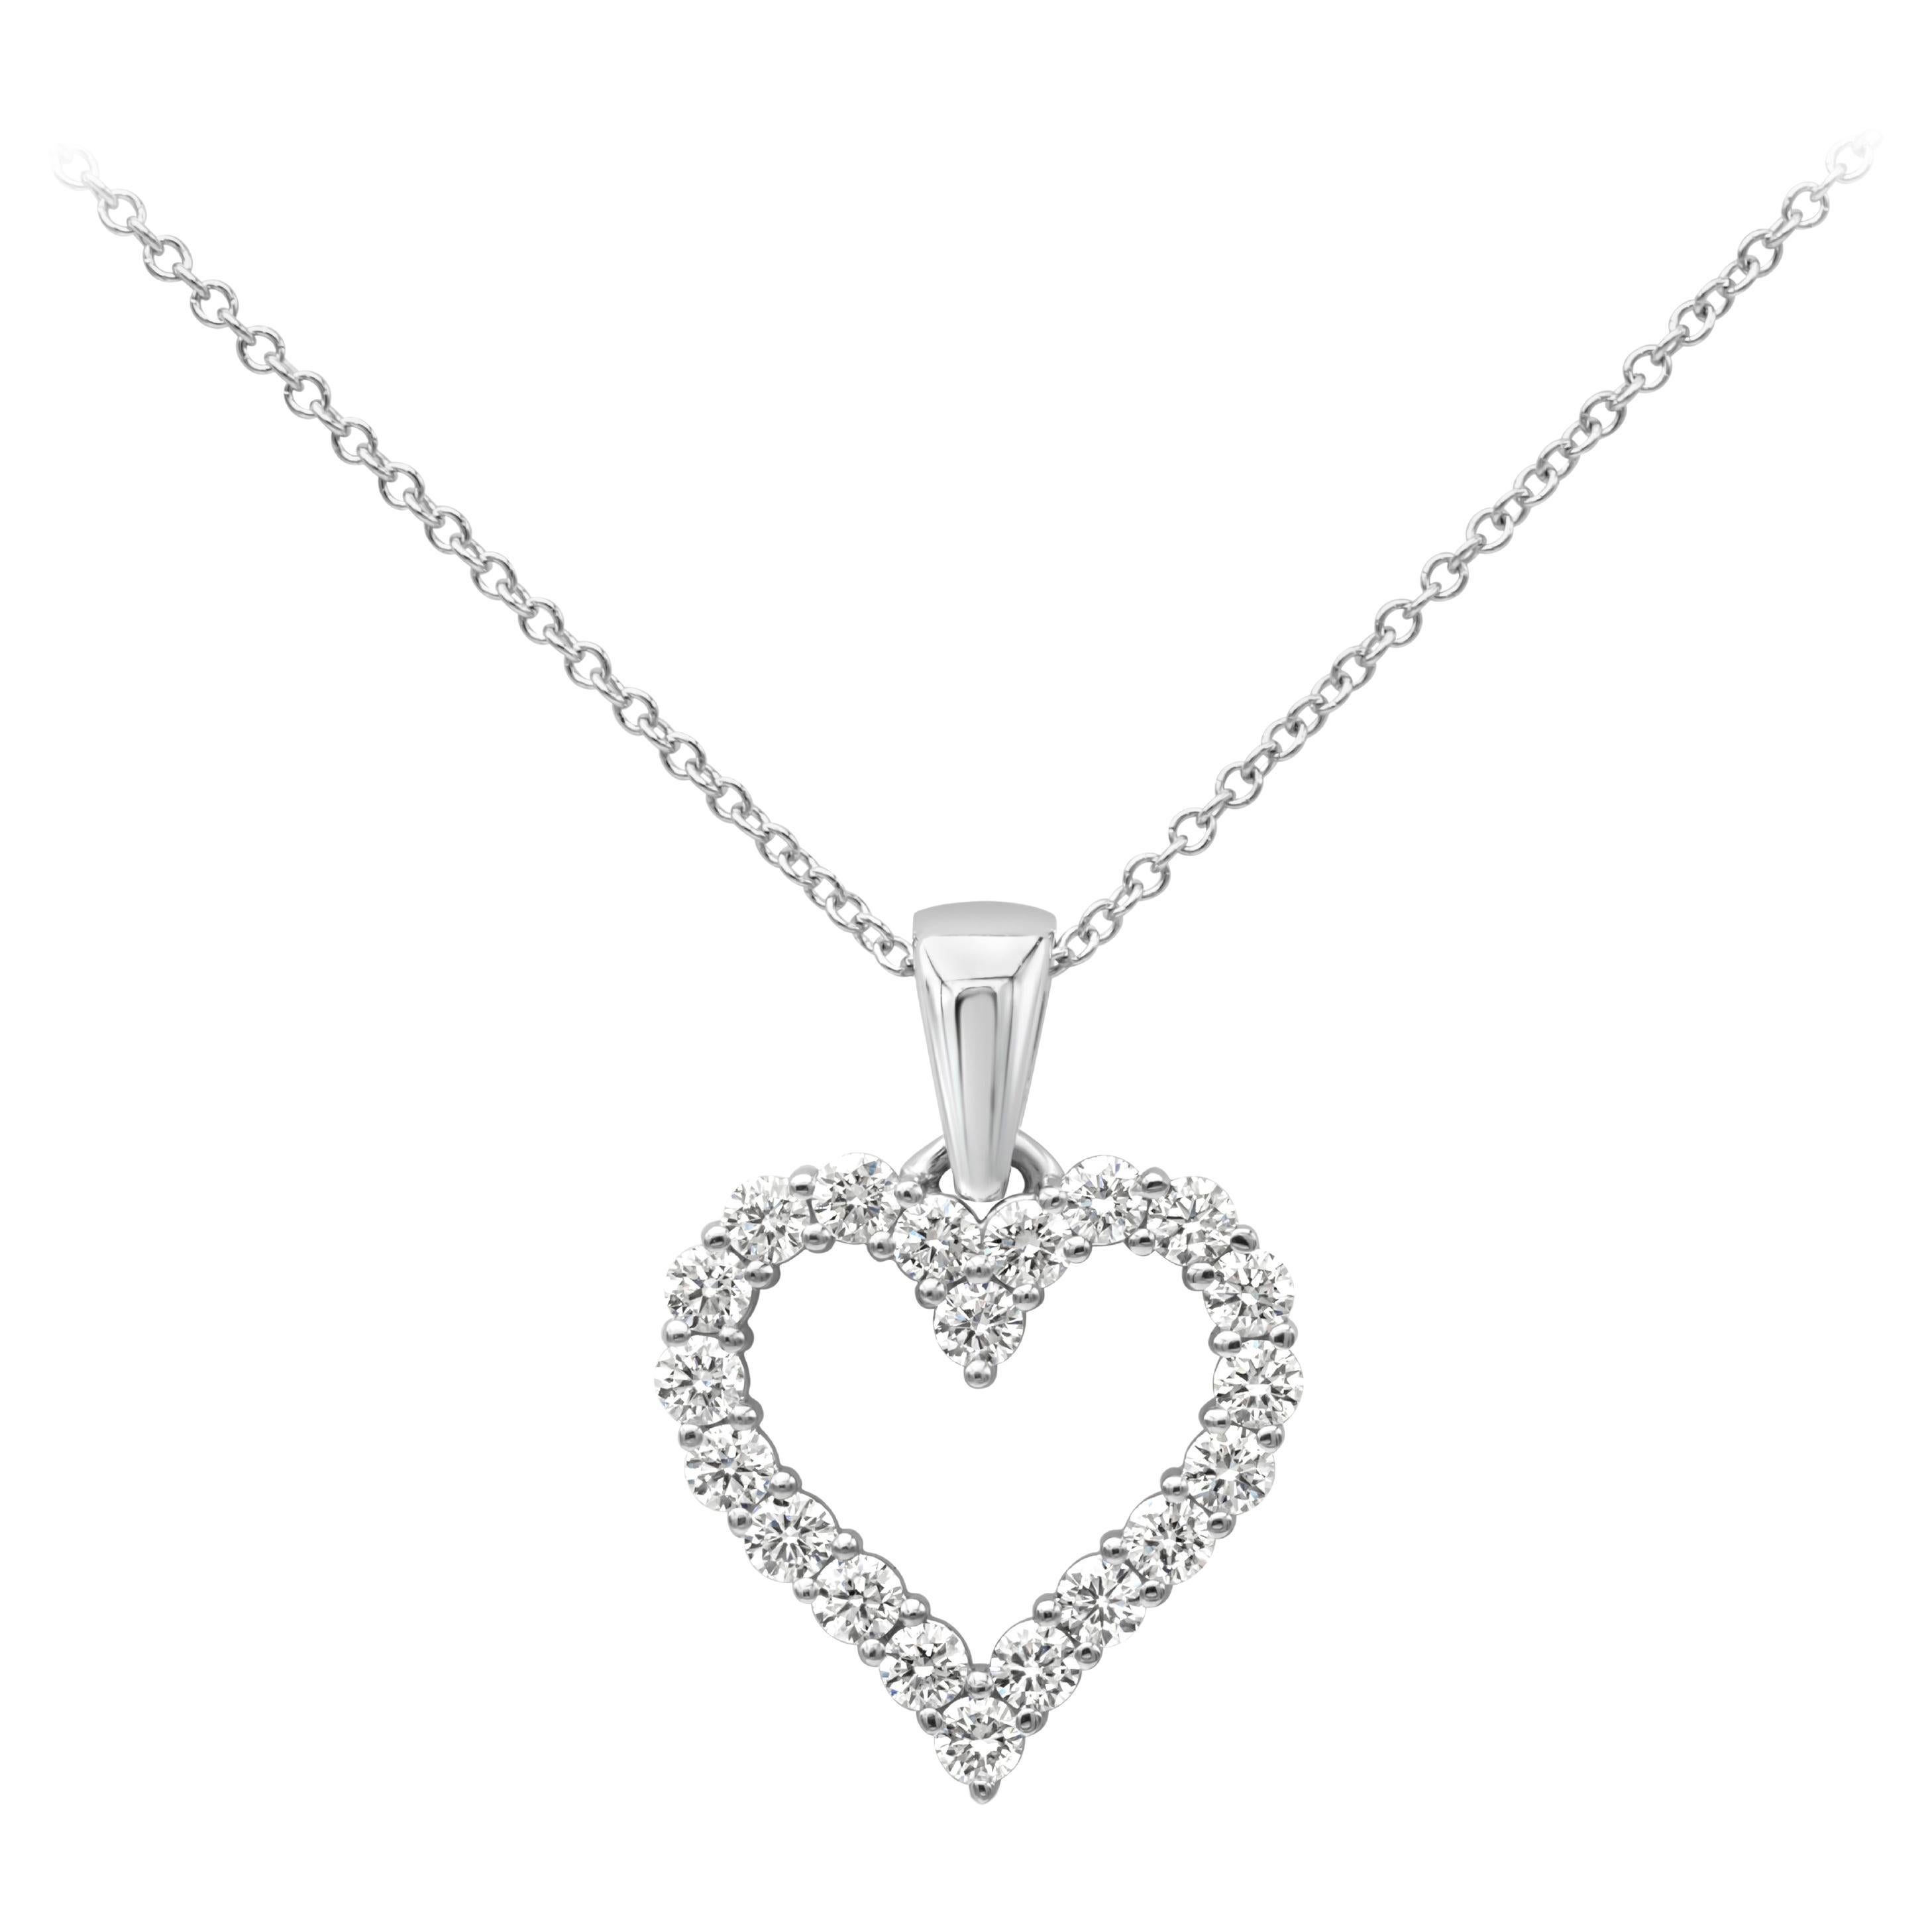 0.66 Carats Total Brilliant Round Shape Diamond Open-Work Heart Pendant Necklace